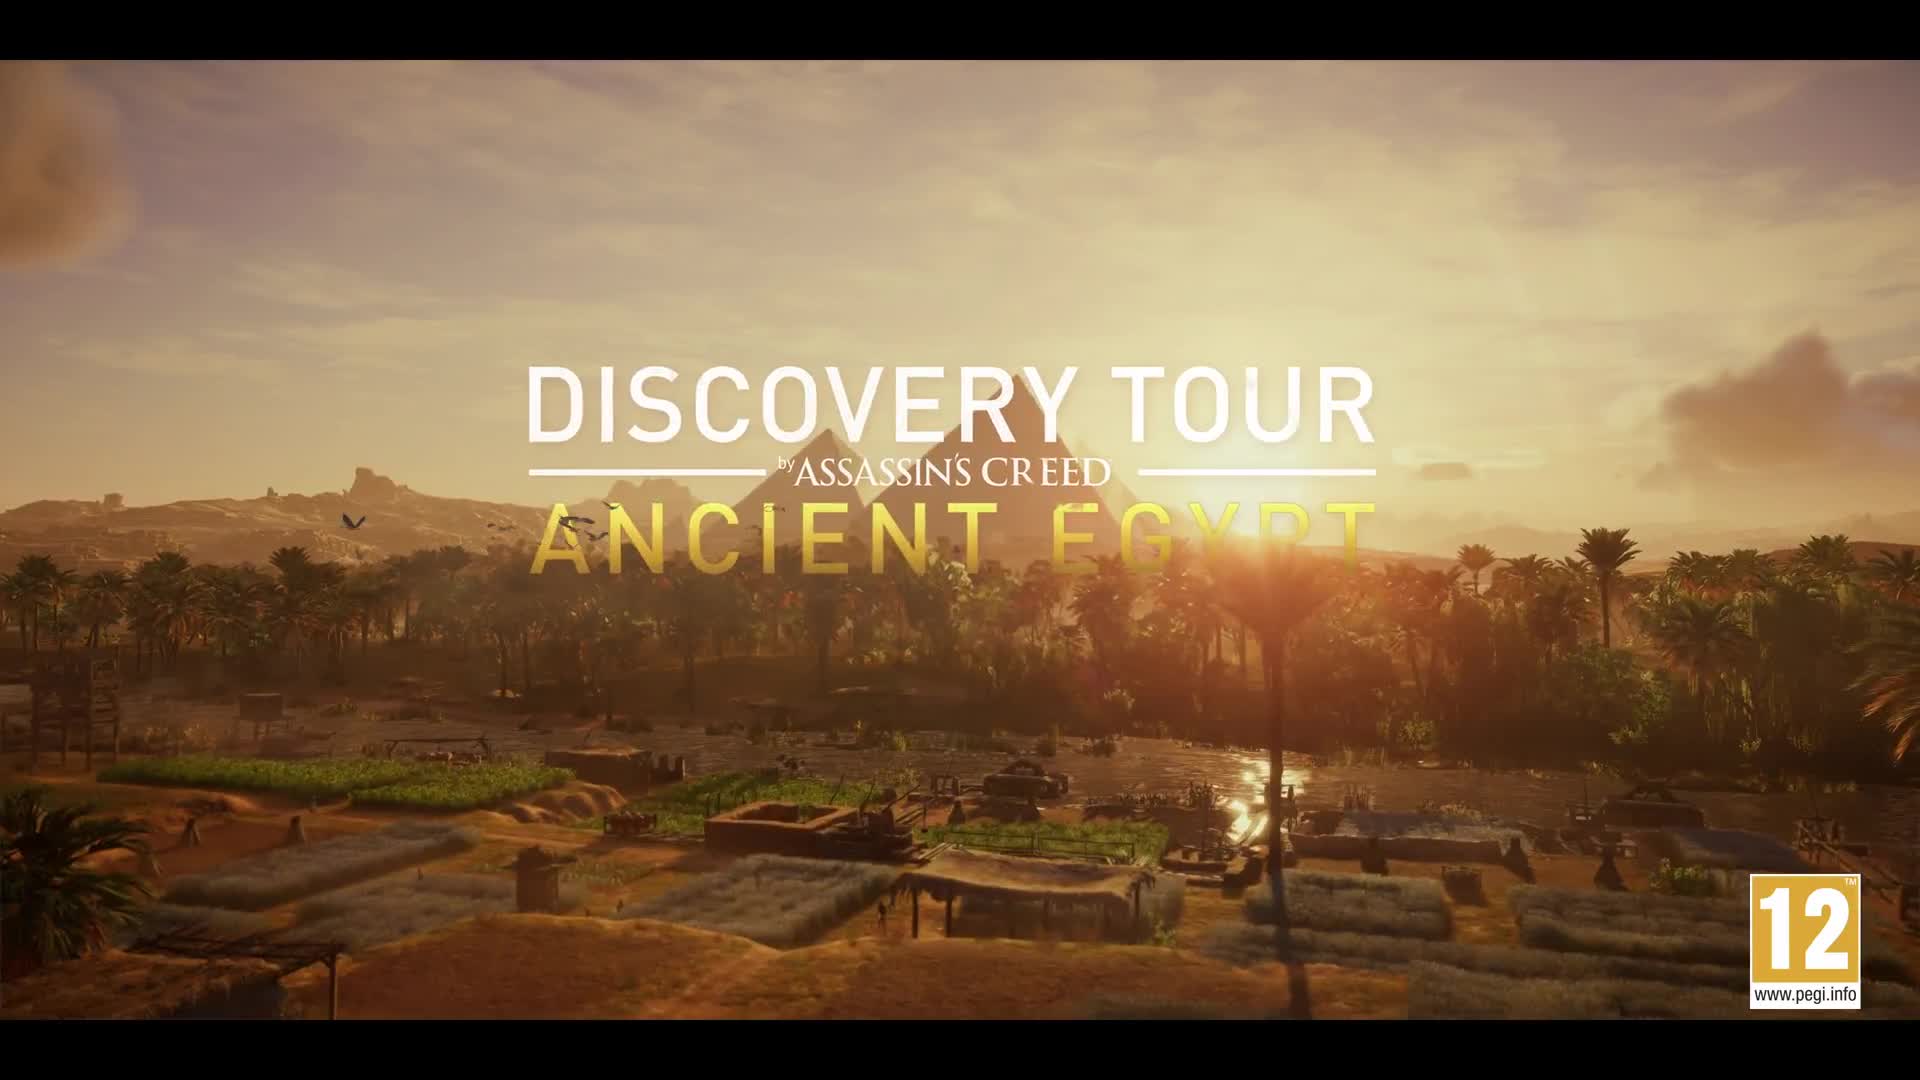 Assassin's Creed Origins bol prve obohaten o Discovery tour